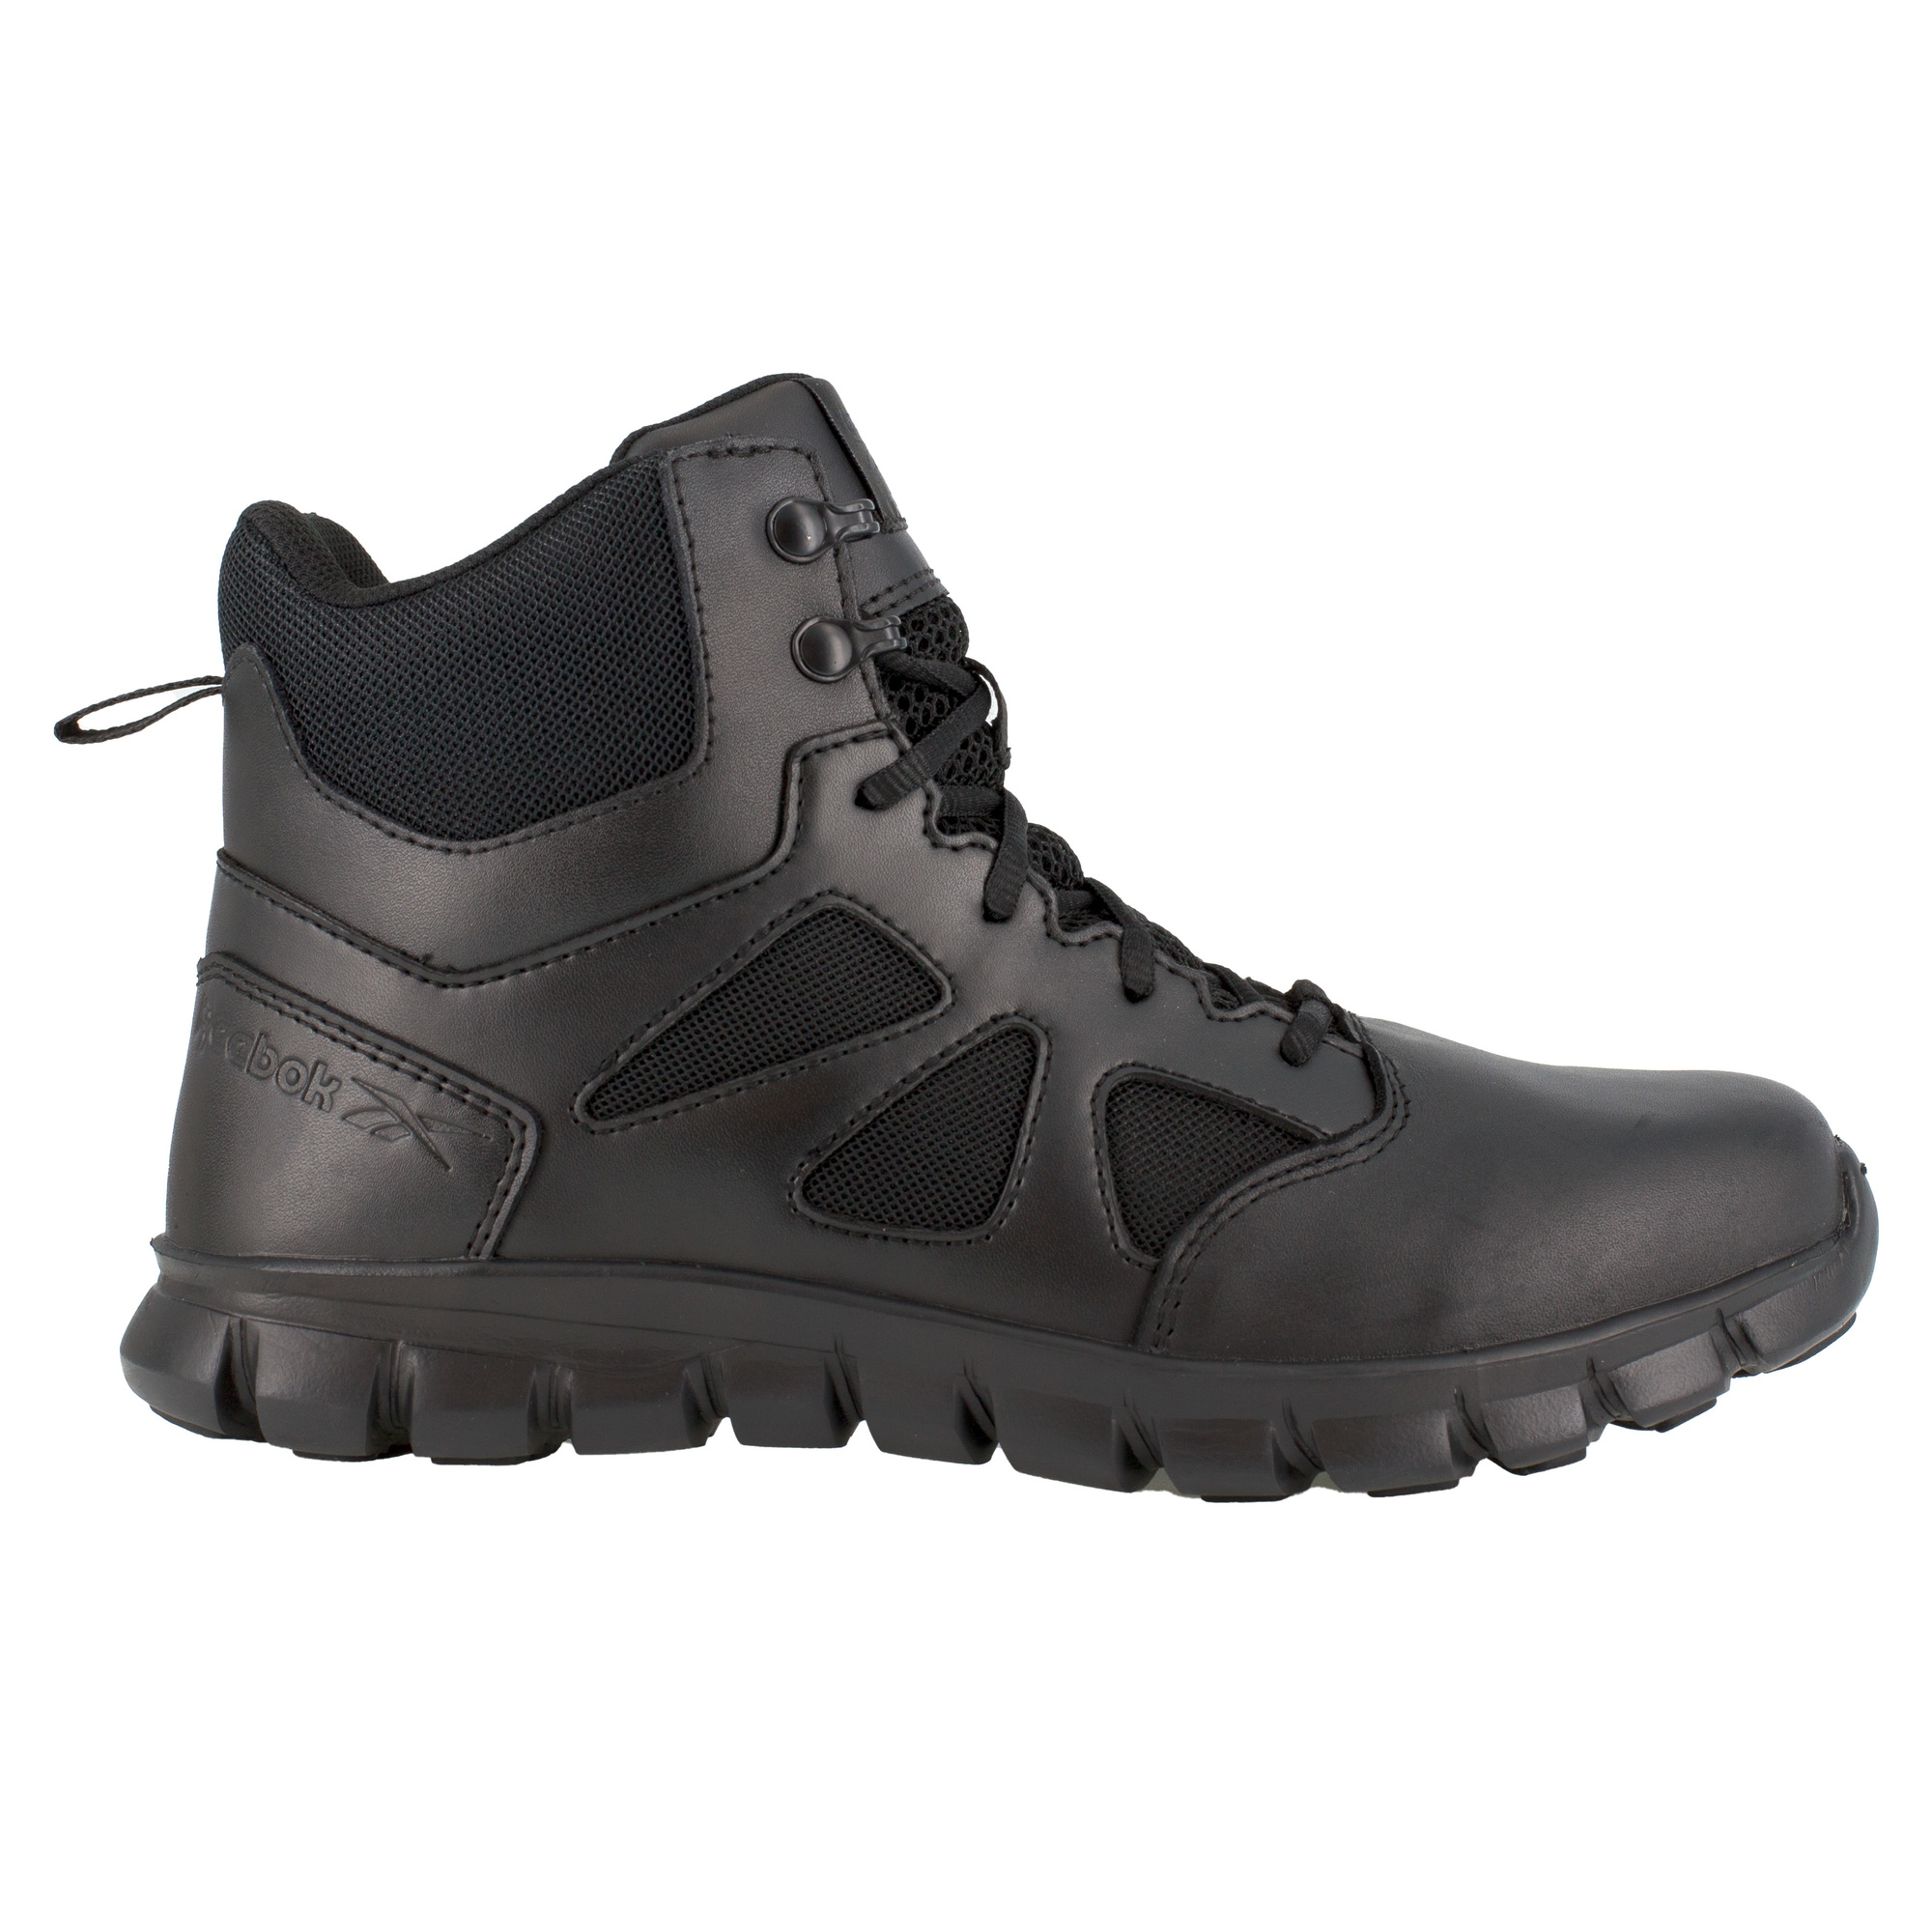 Reebok, 6Inch Tactical Boot w/Side Zipper, Size 10 1/2, Width Medium, Color Black, Model RB086